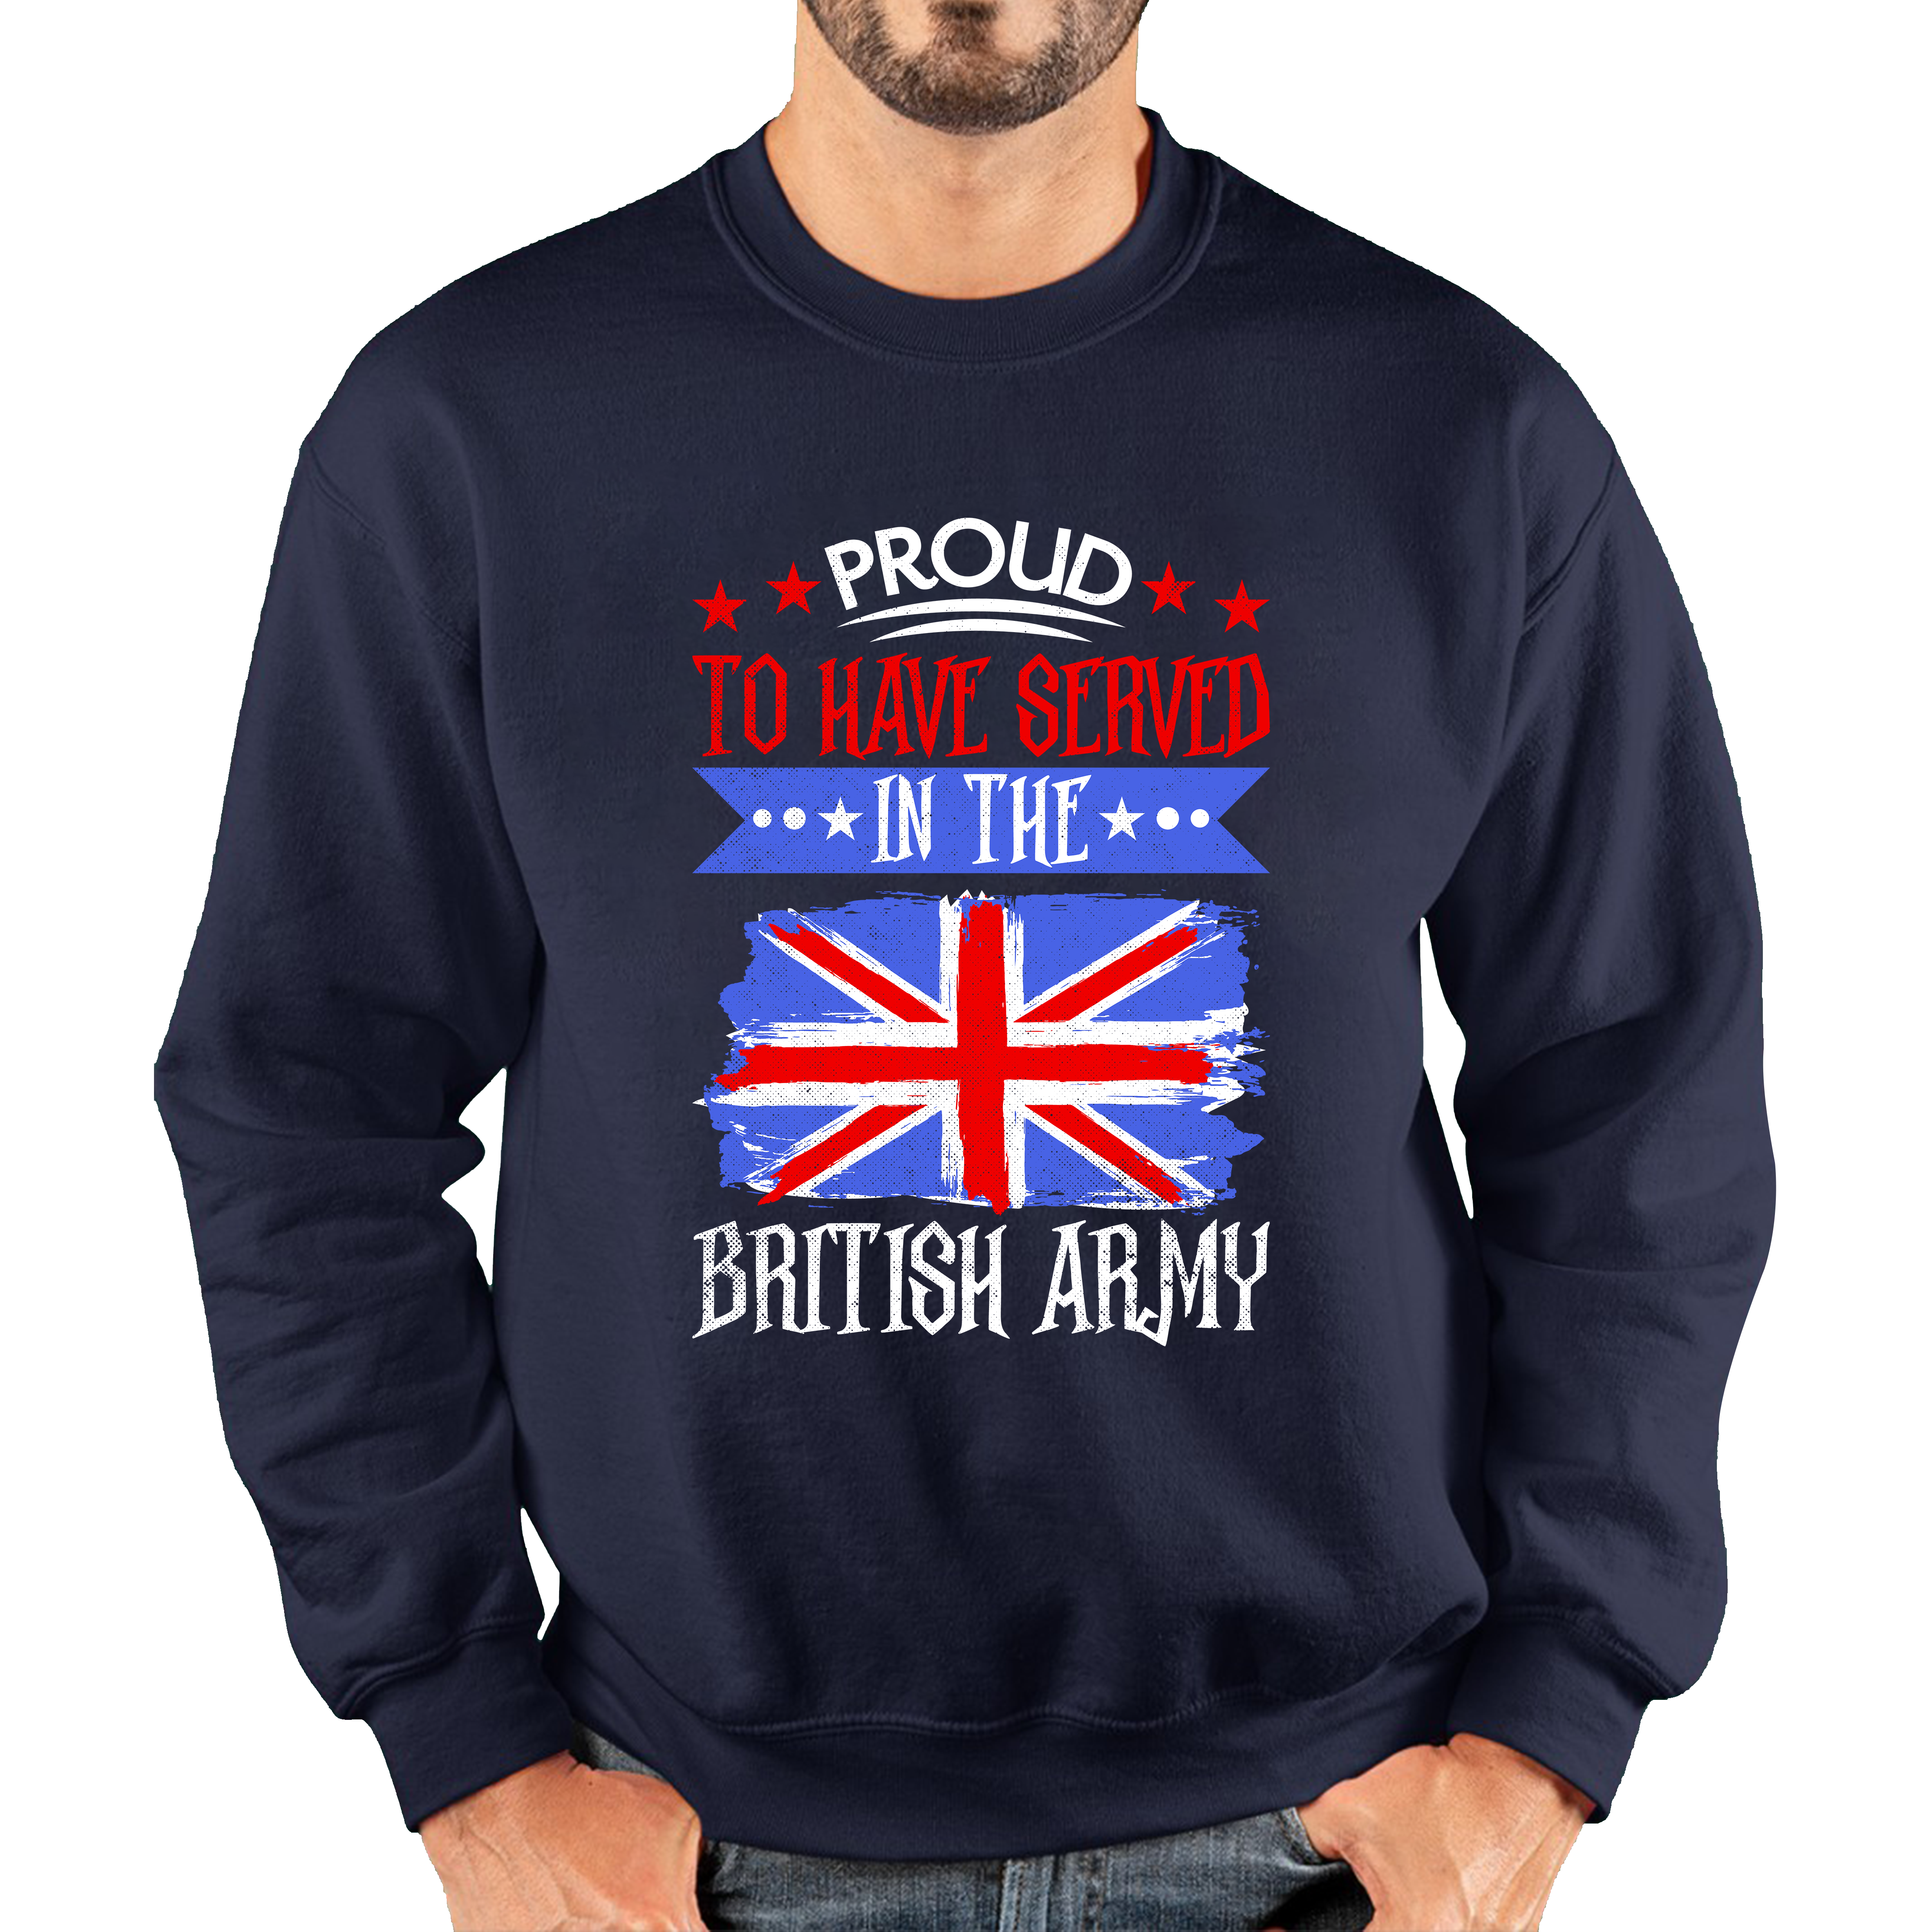 British Army Sweatshirt